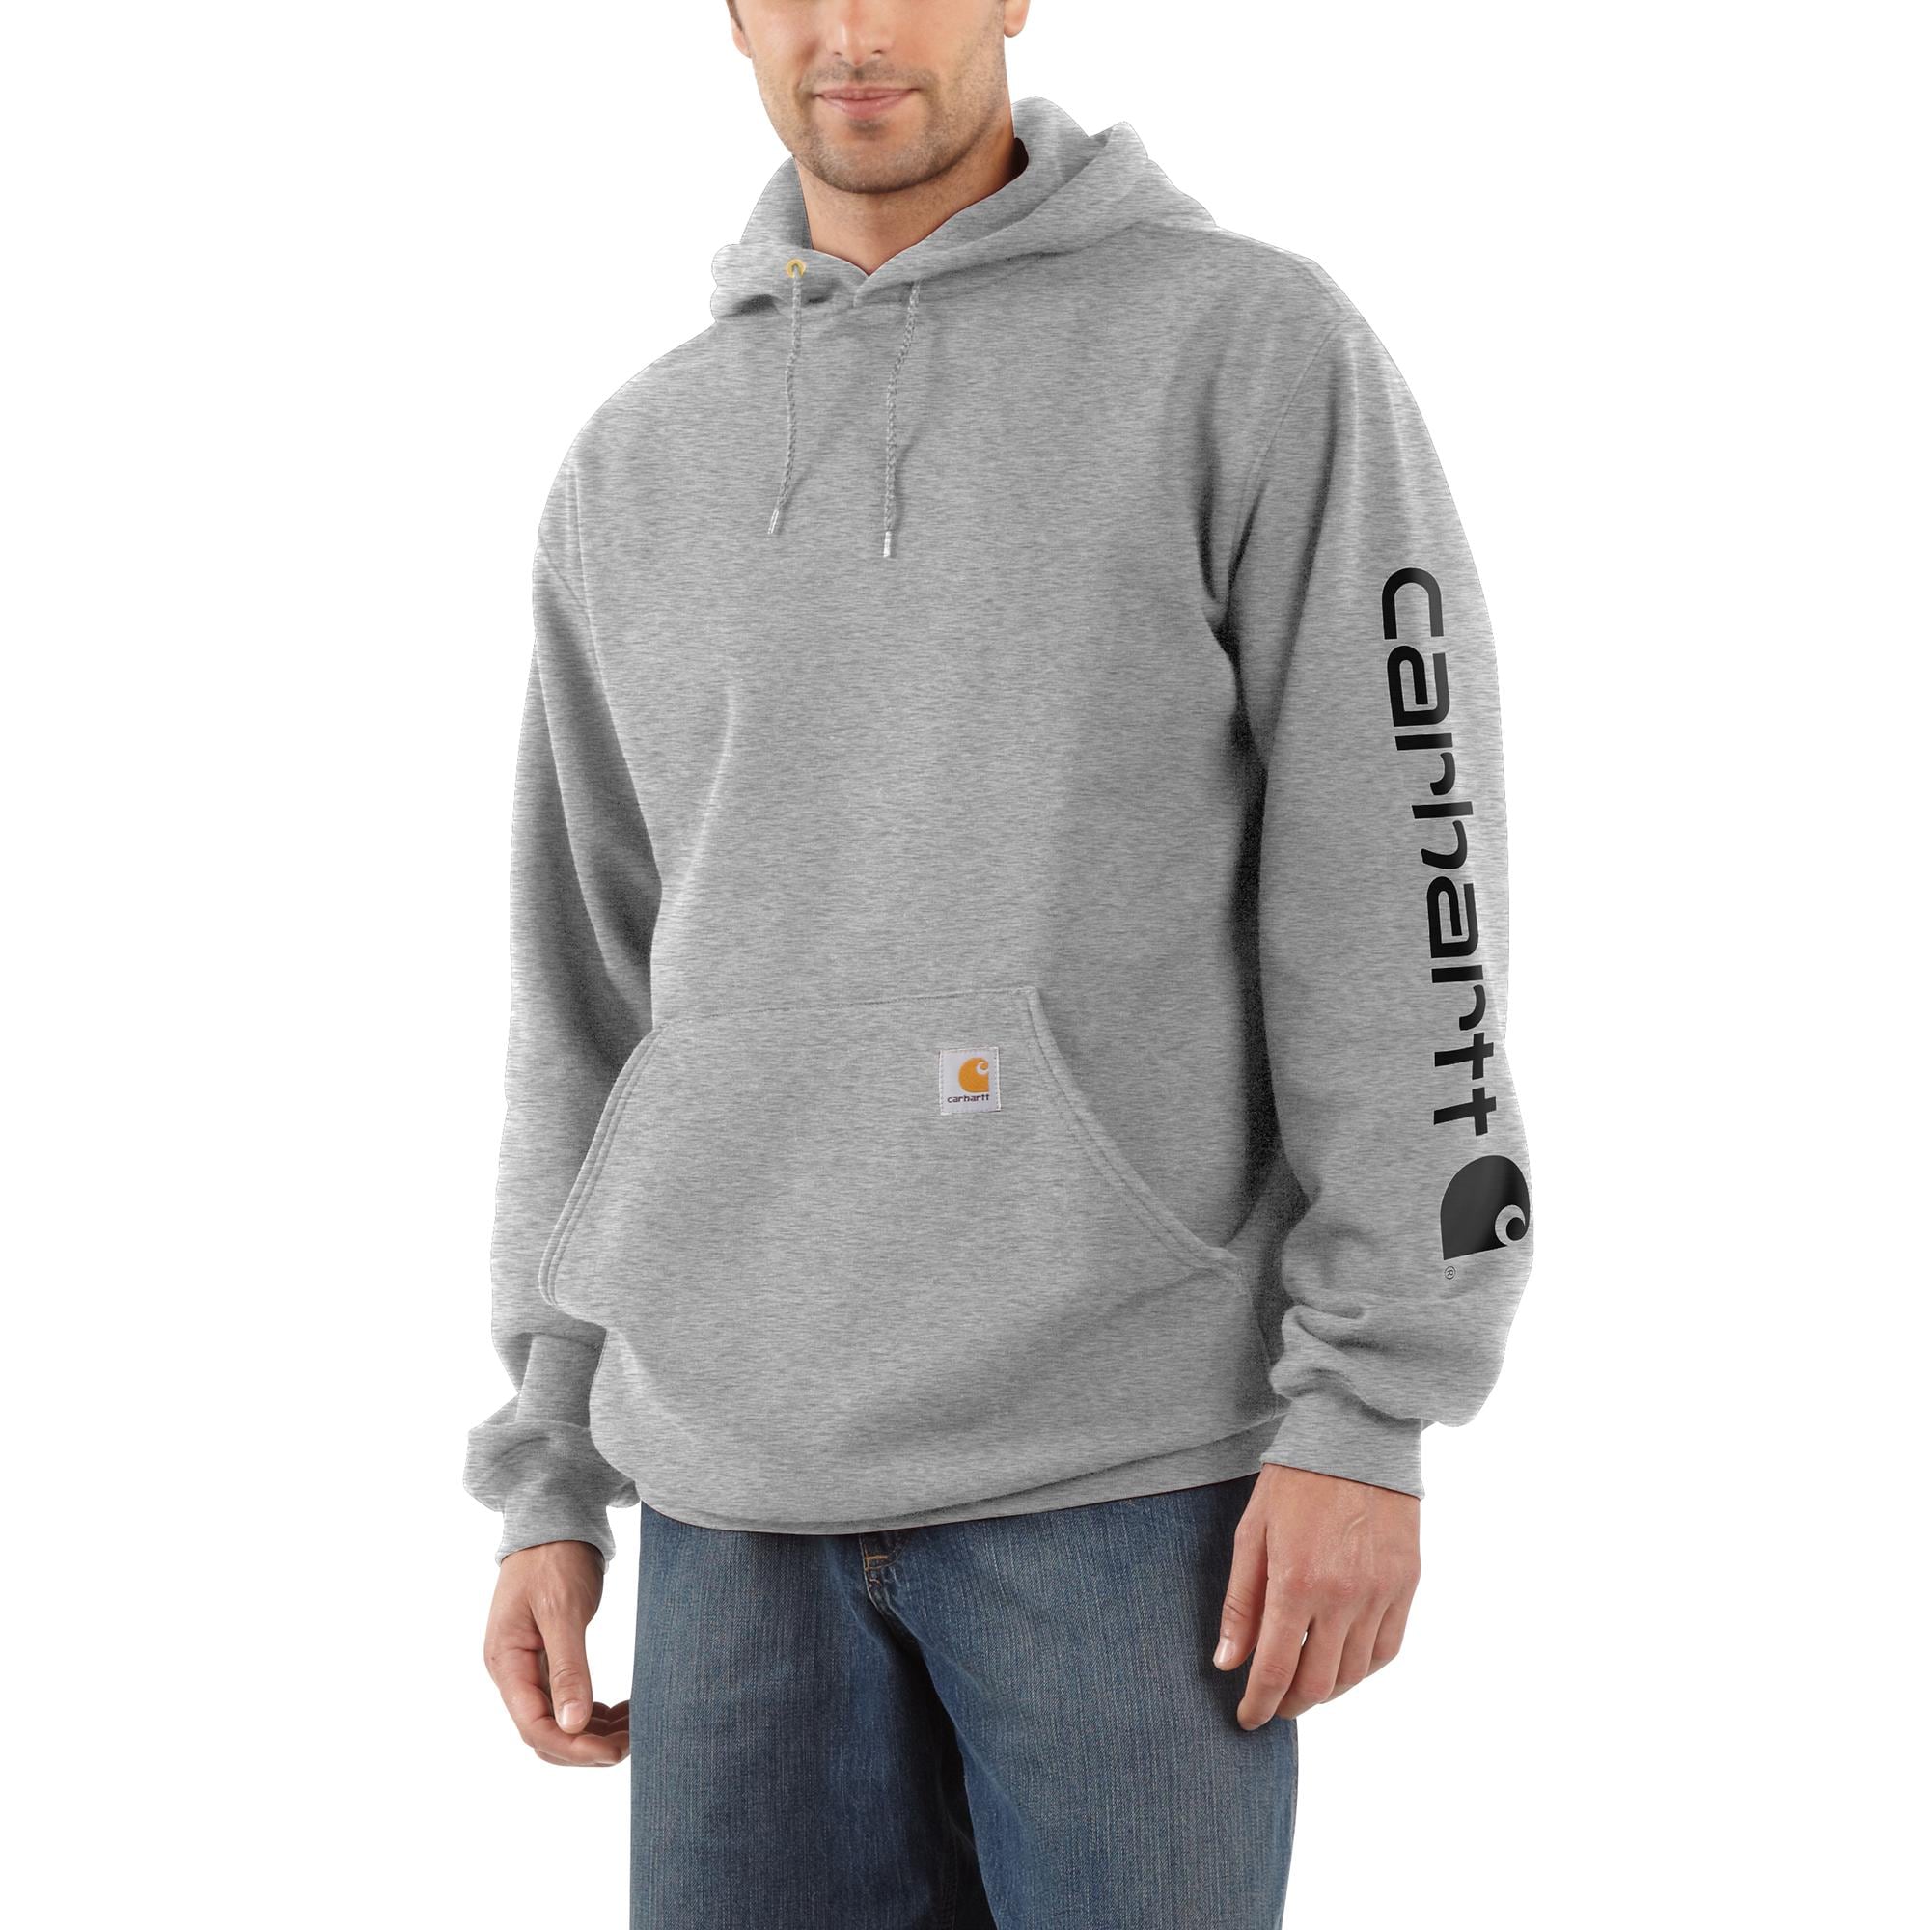 Carhartt Men's Fleece Long Sleeve Graphic Hoodie (X-small) in the